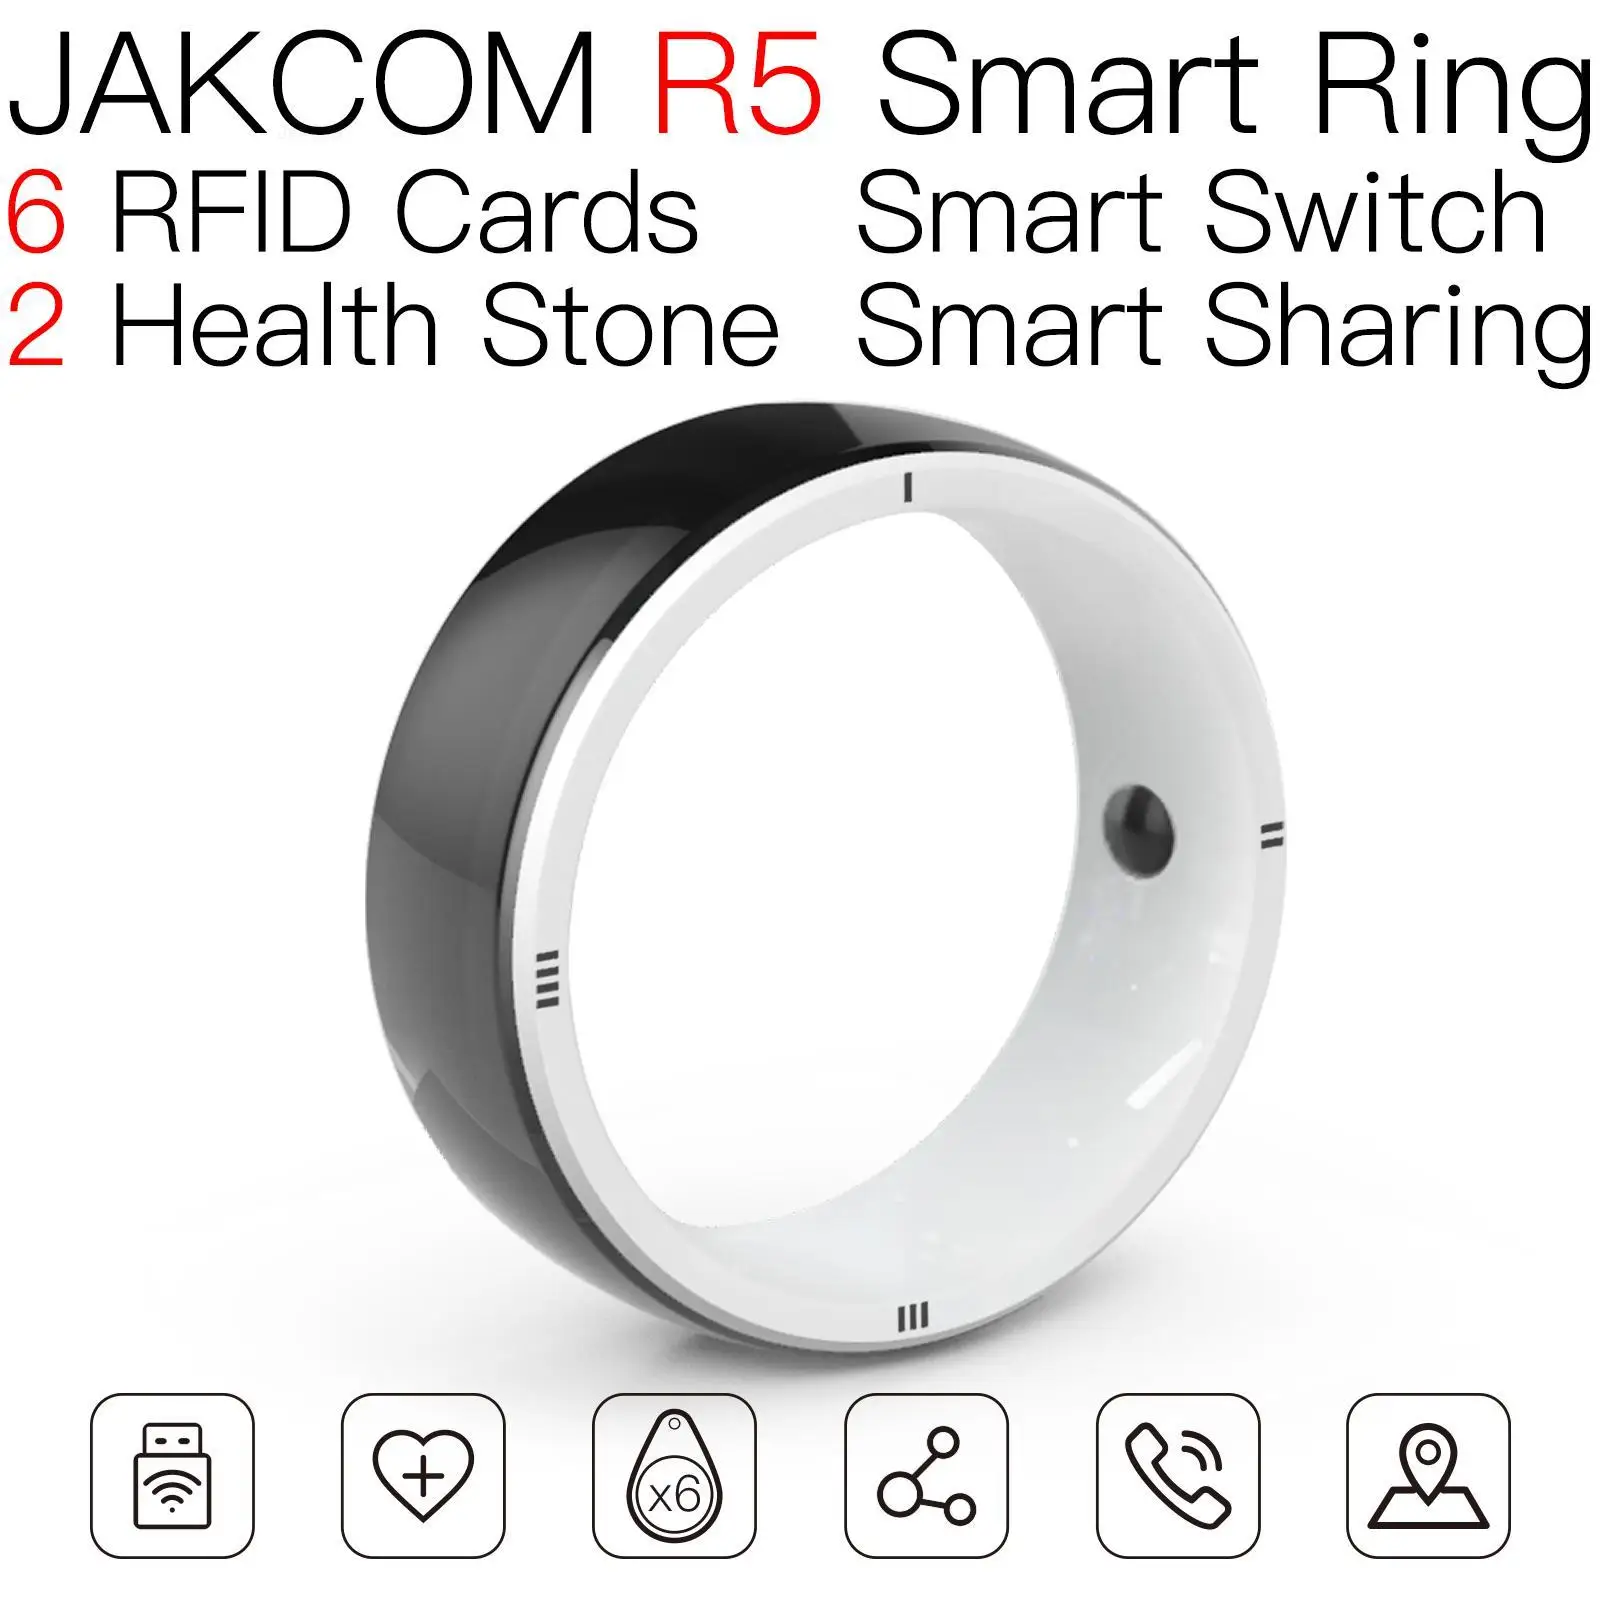 

JAKCOM R5 Smart Ring Newer than alien h3 nfc immobilizer car token tags writable system cards 203 x 176 rfid 125khz rewritable